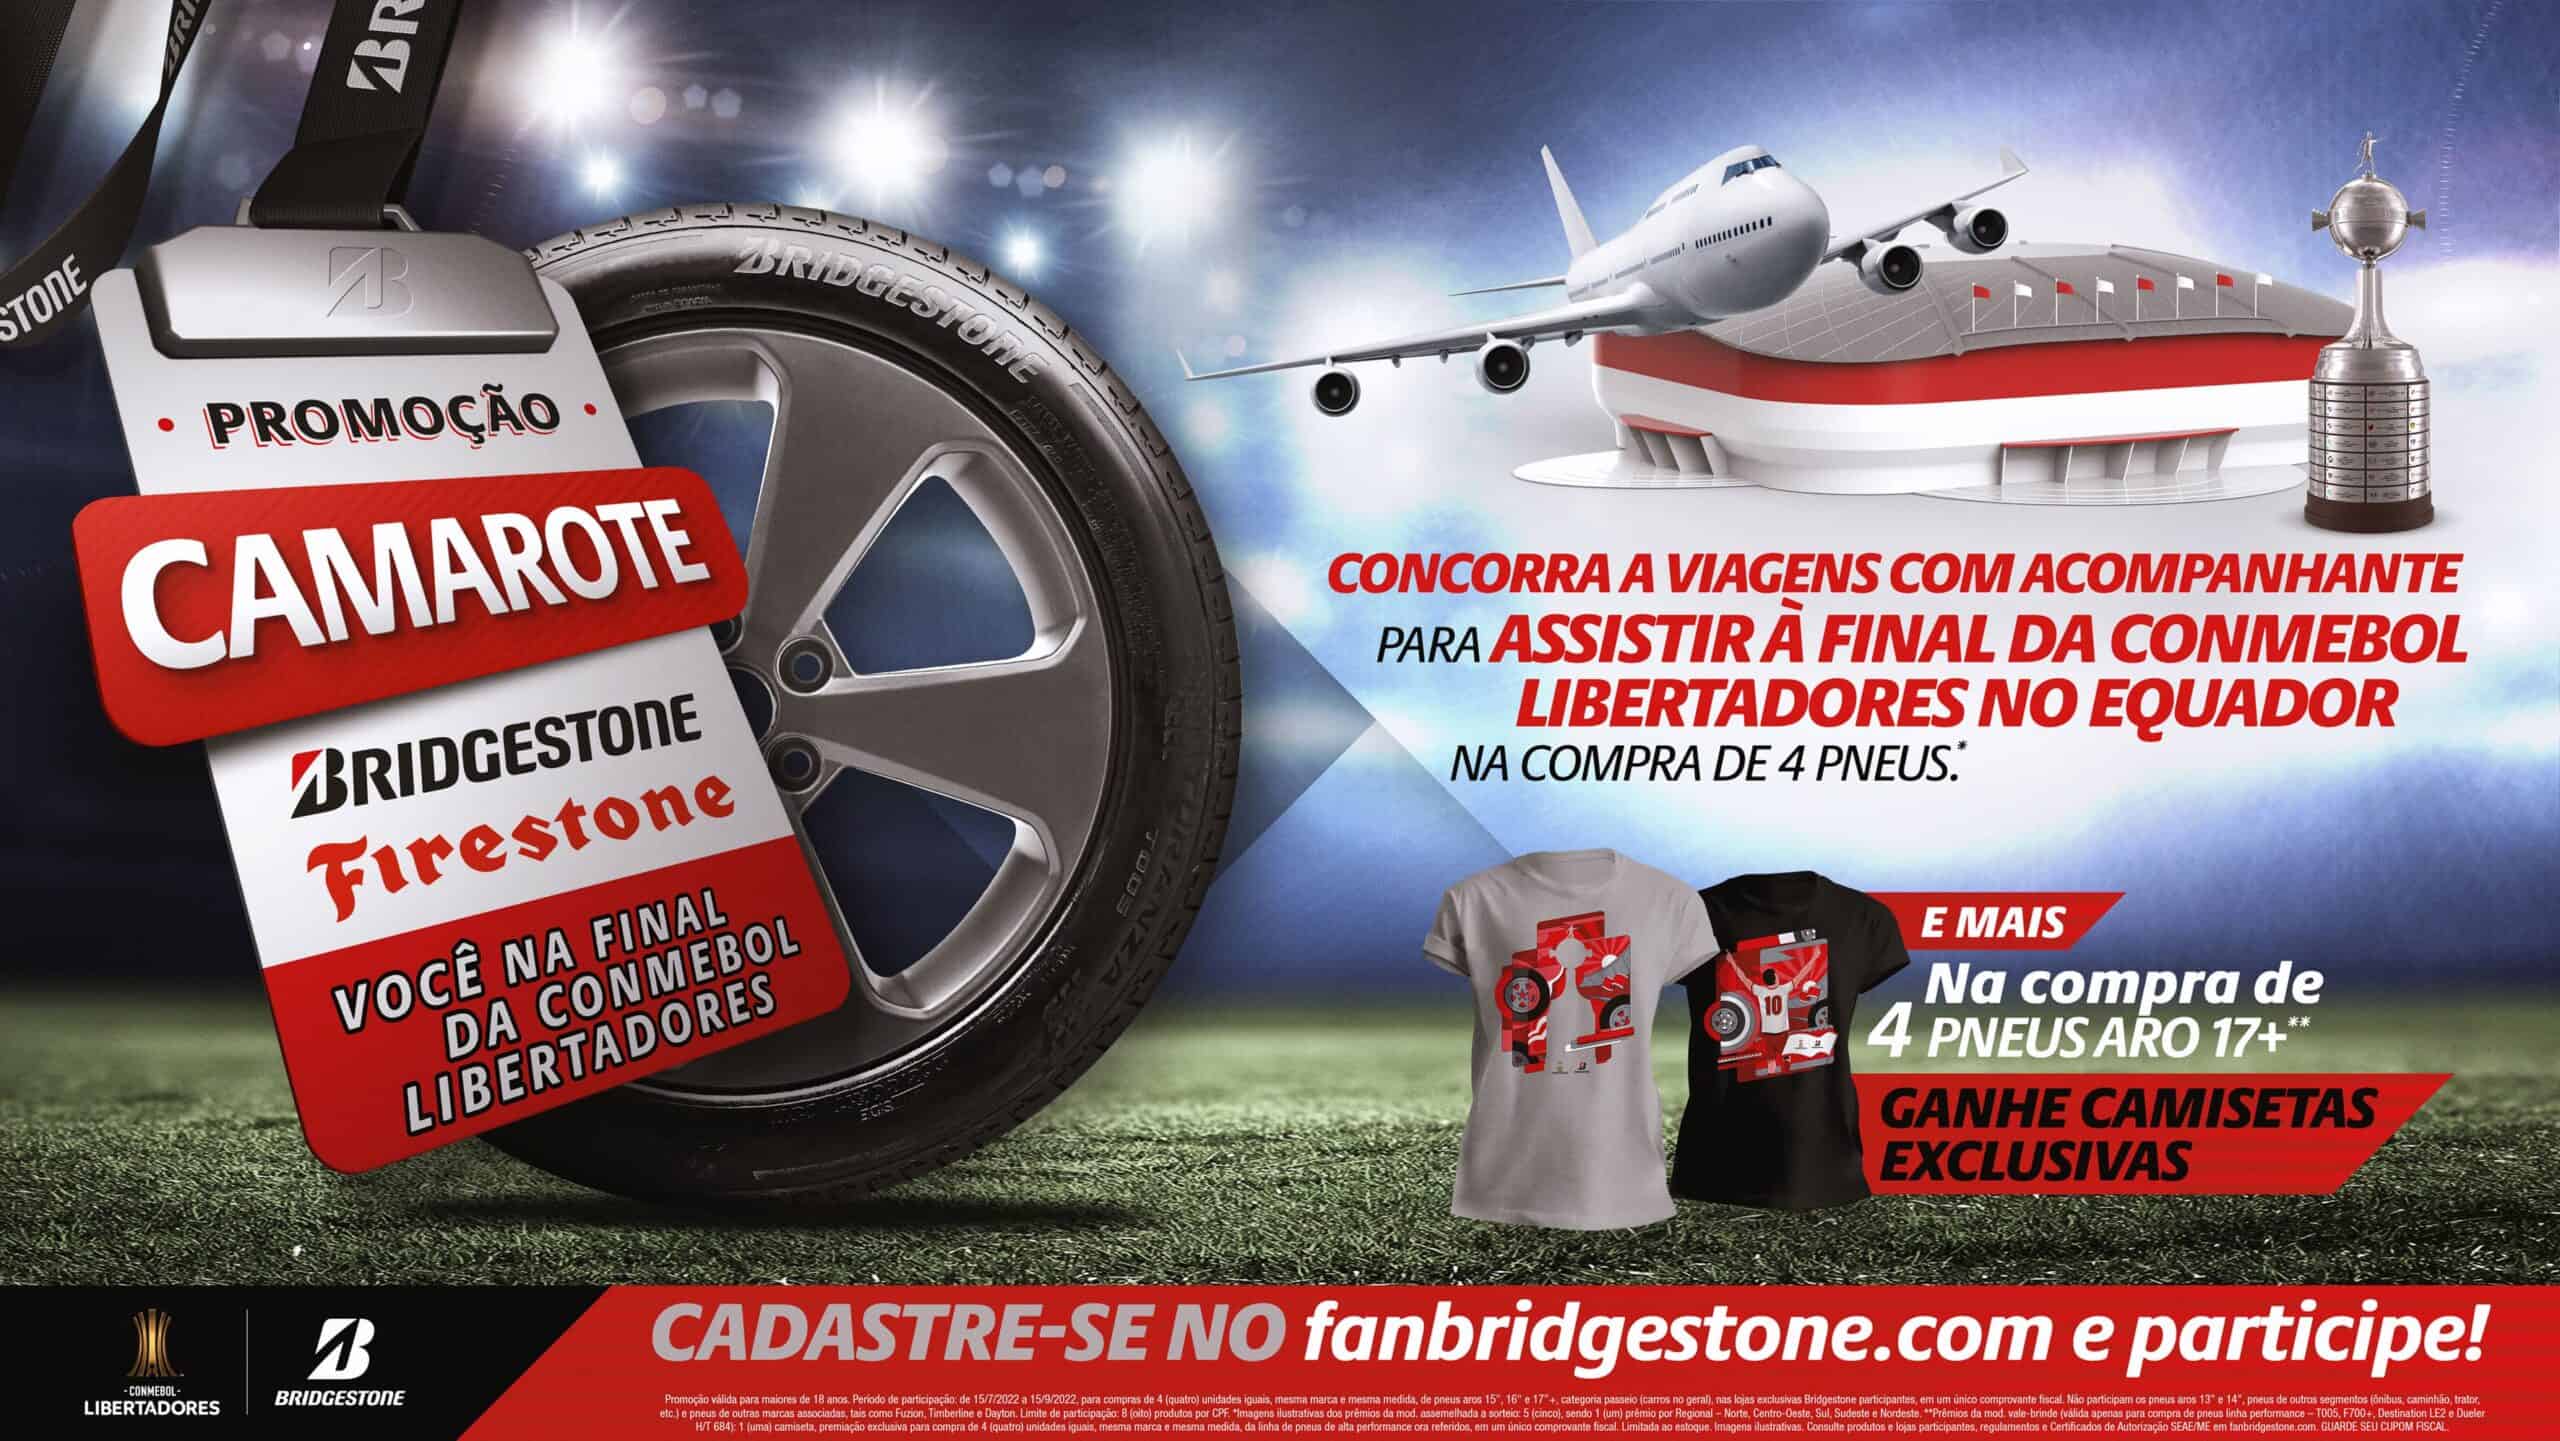 Camarote Bridgestone vai levar clientes para a final da Libertadores